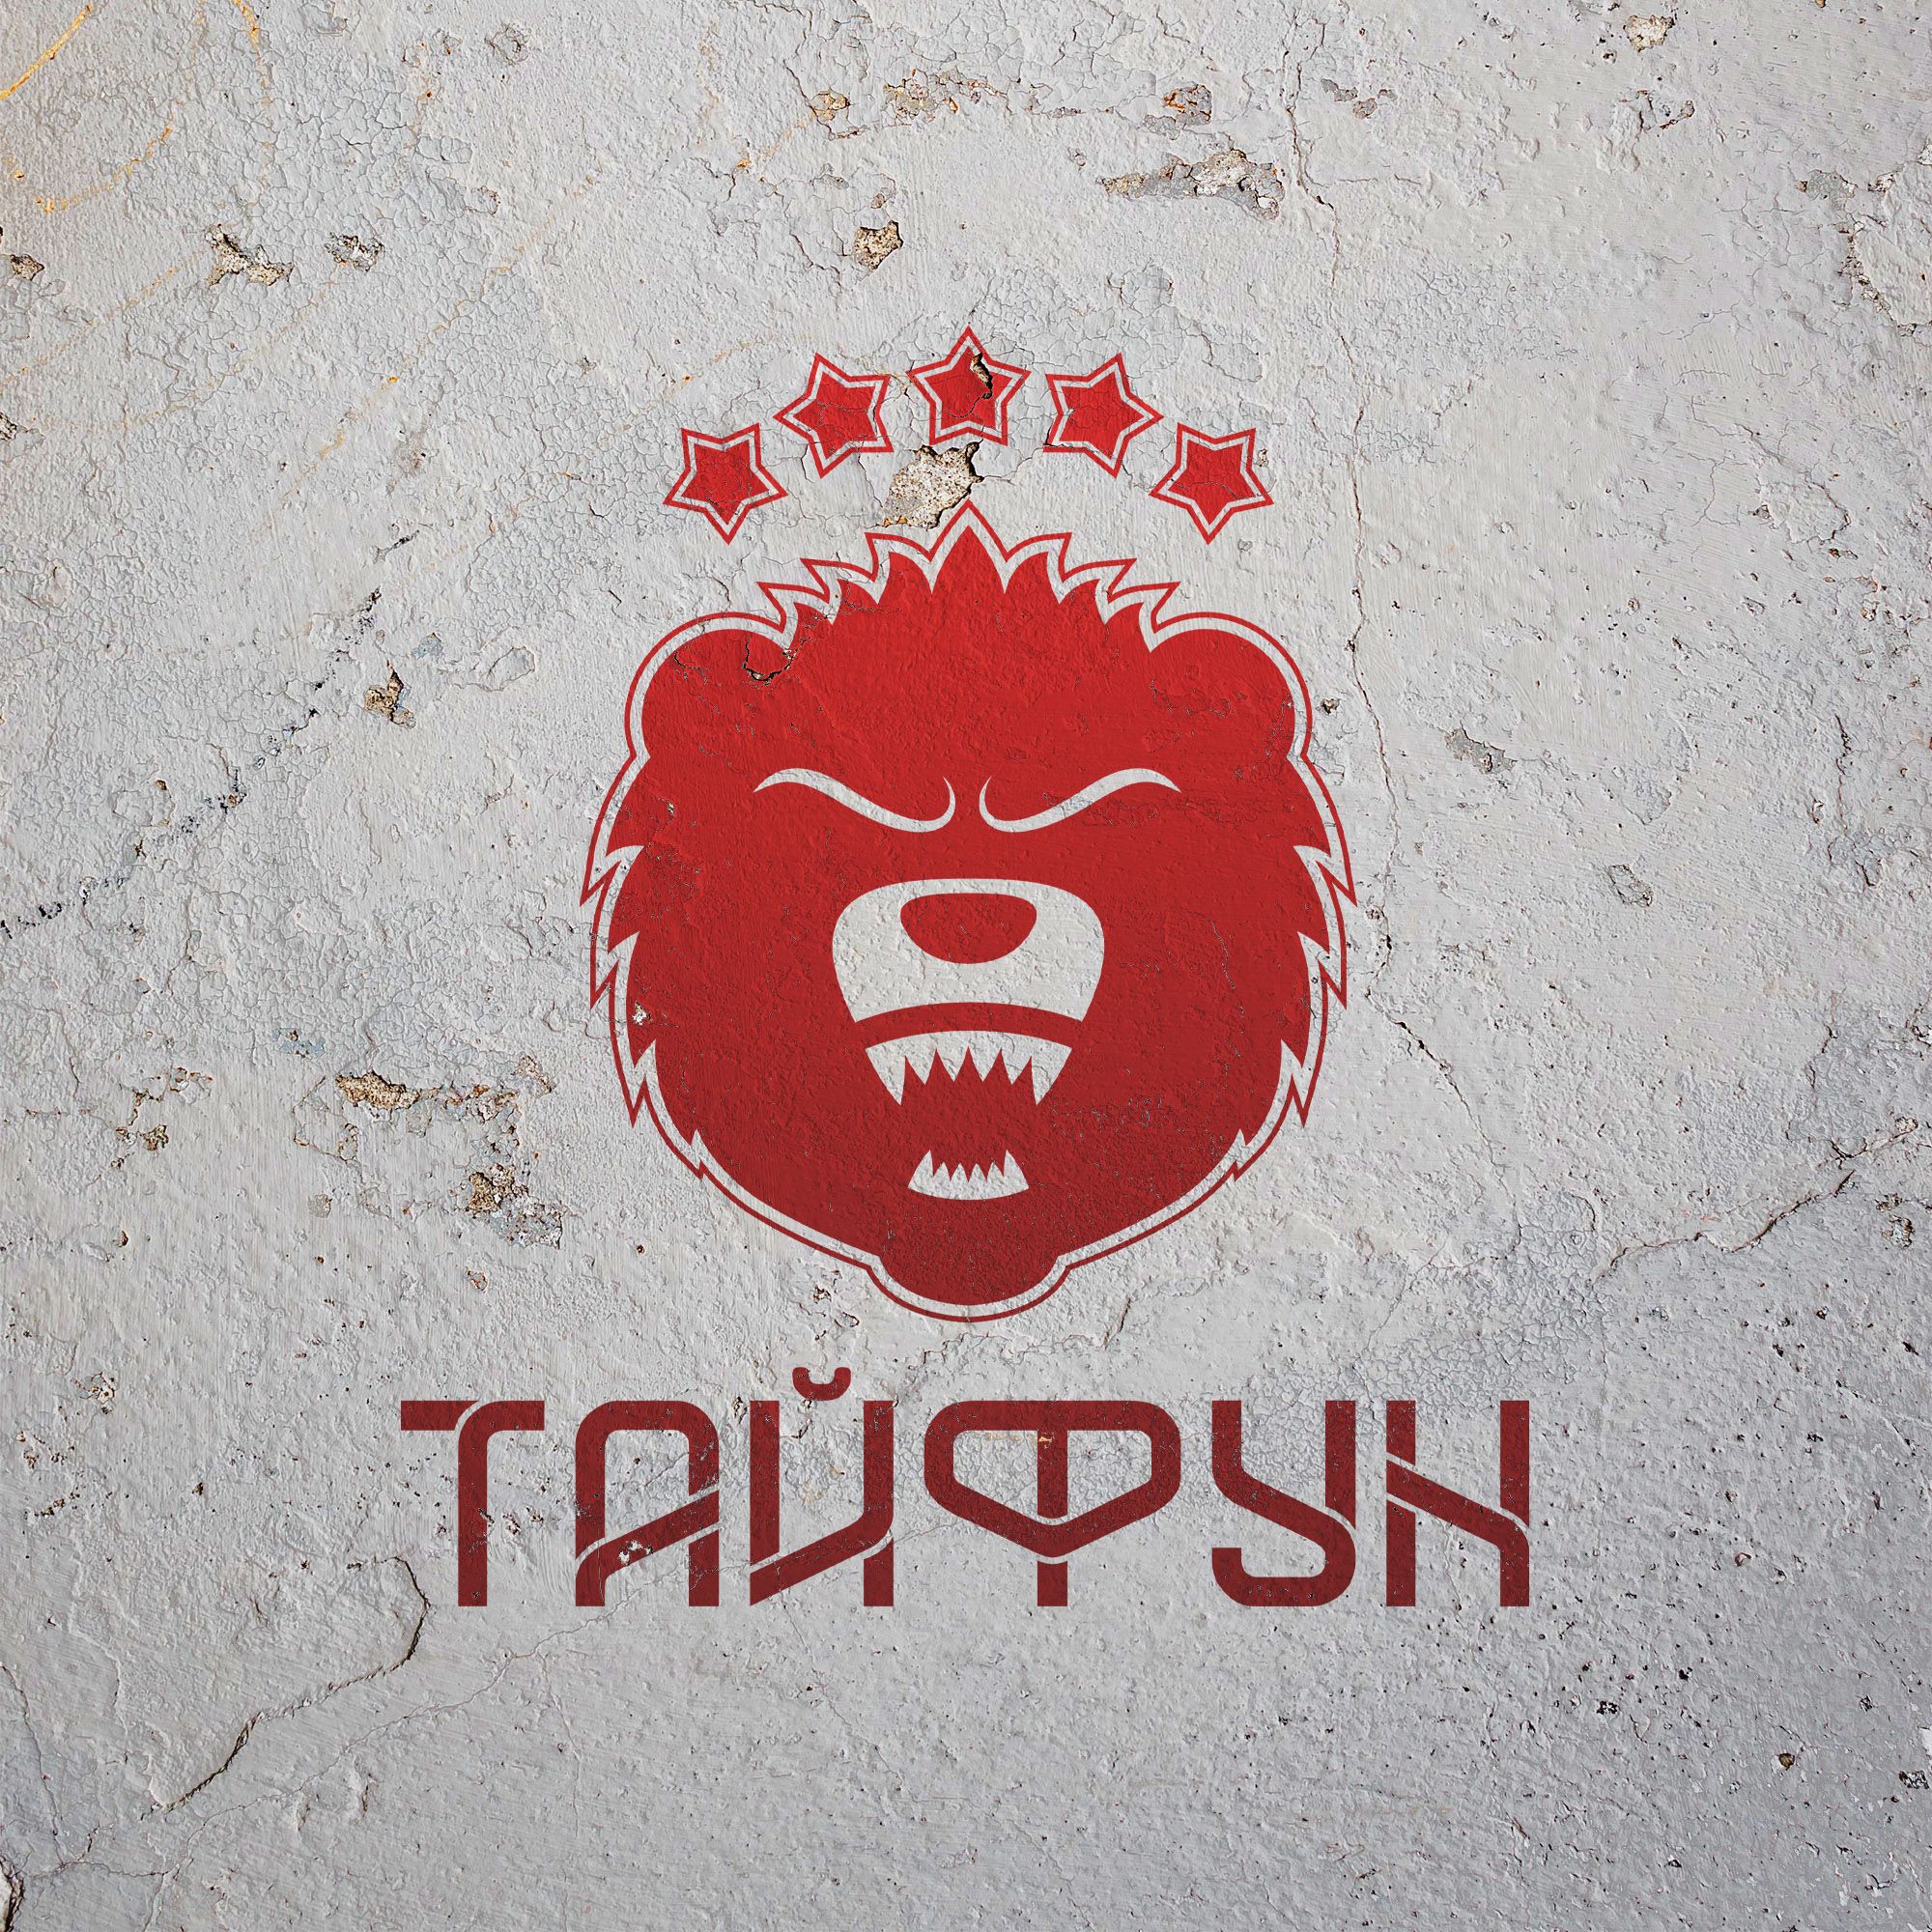 Логотип для Бойцовский клуб Тайфун - дизайнер chumarkov